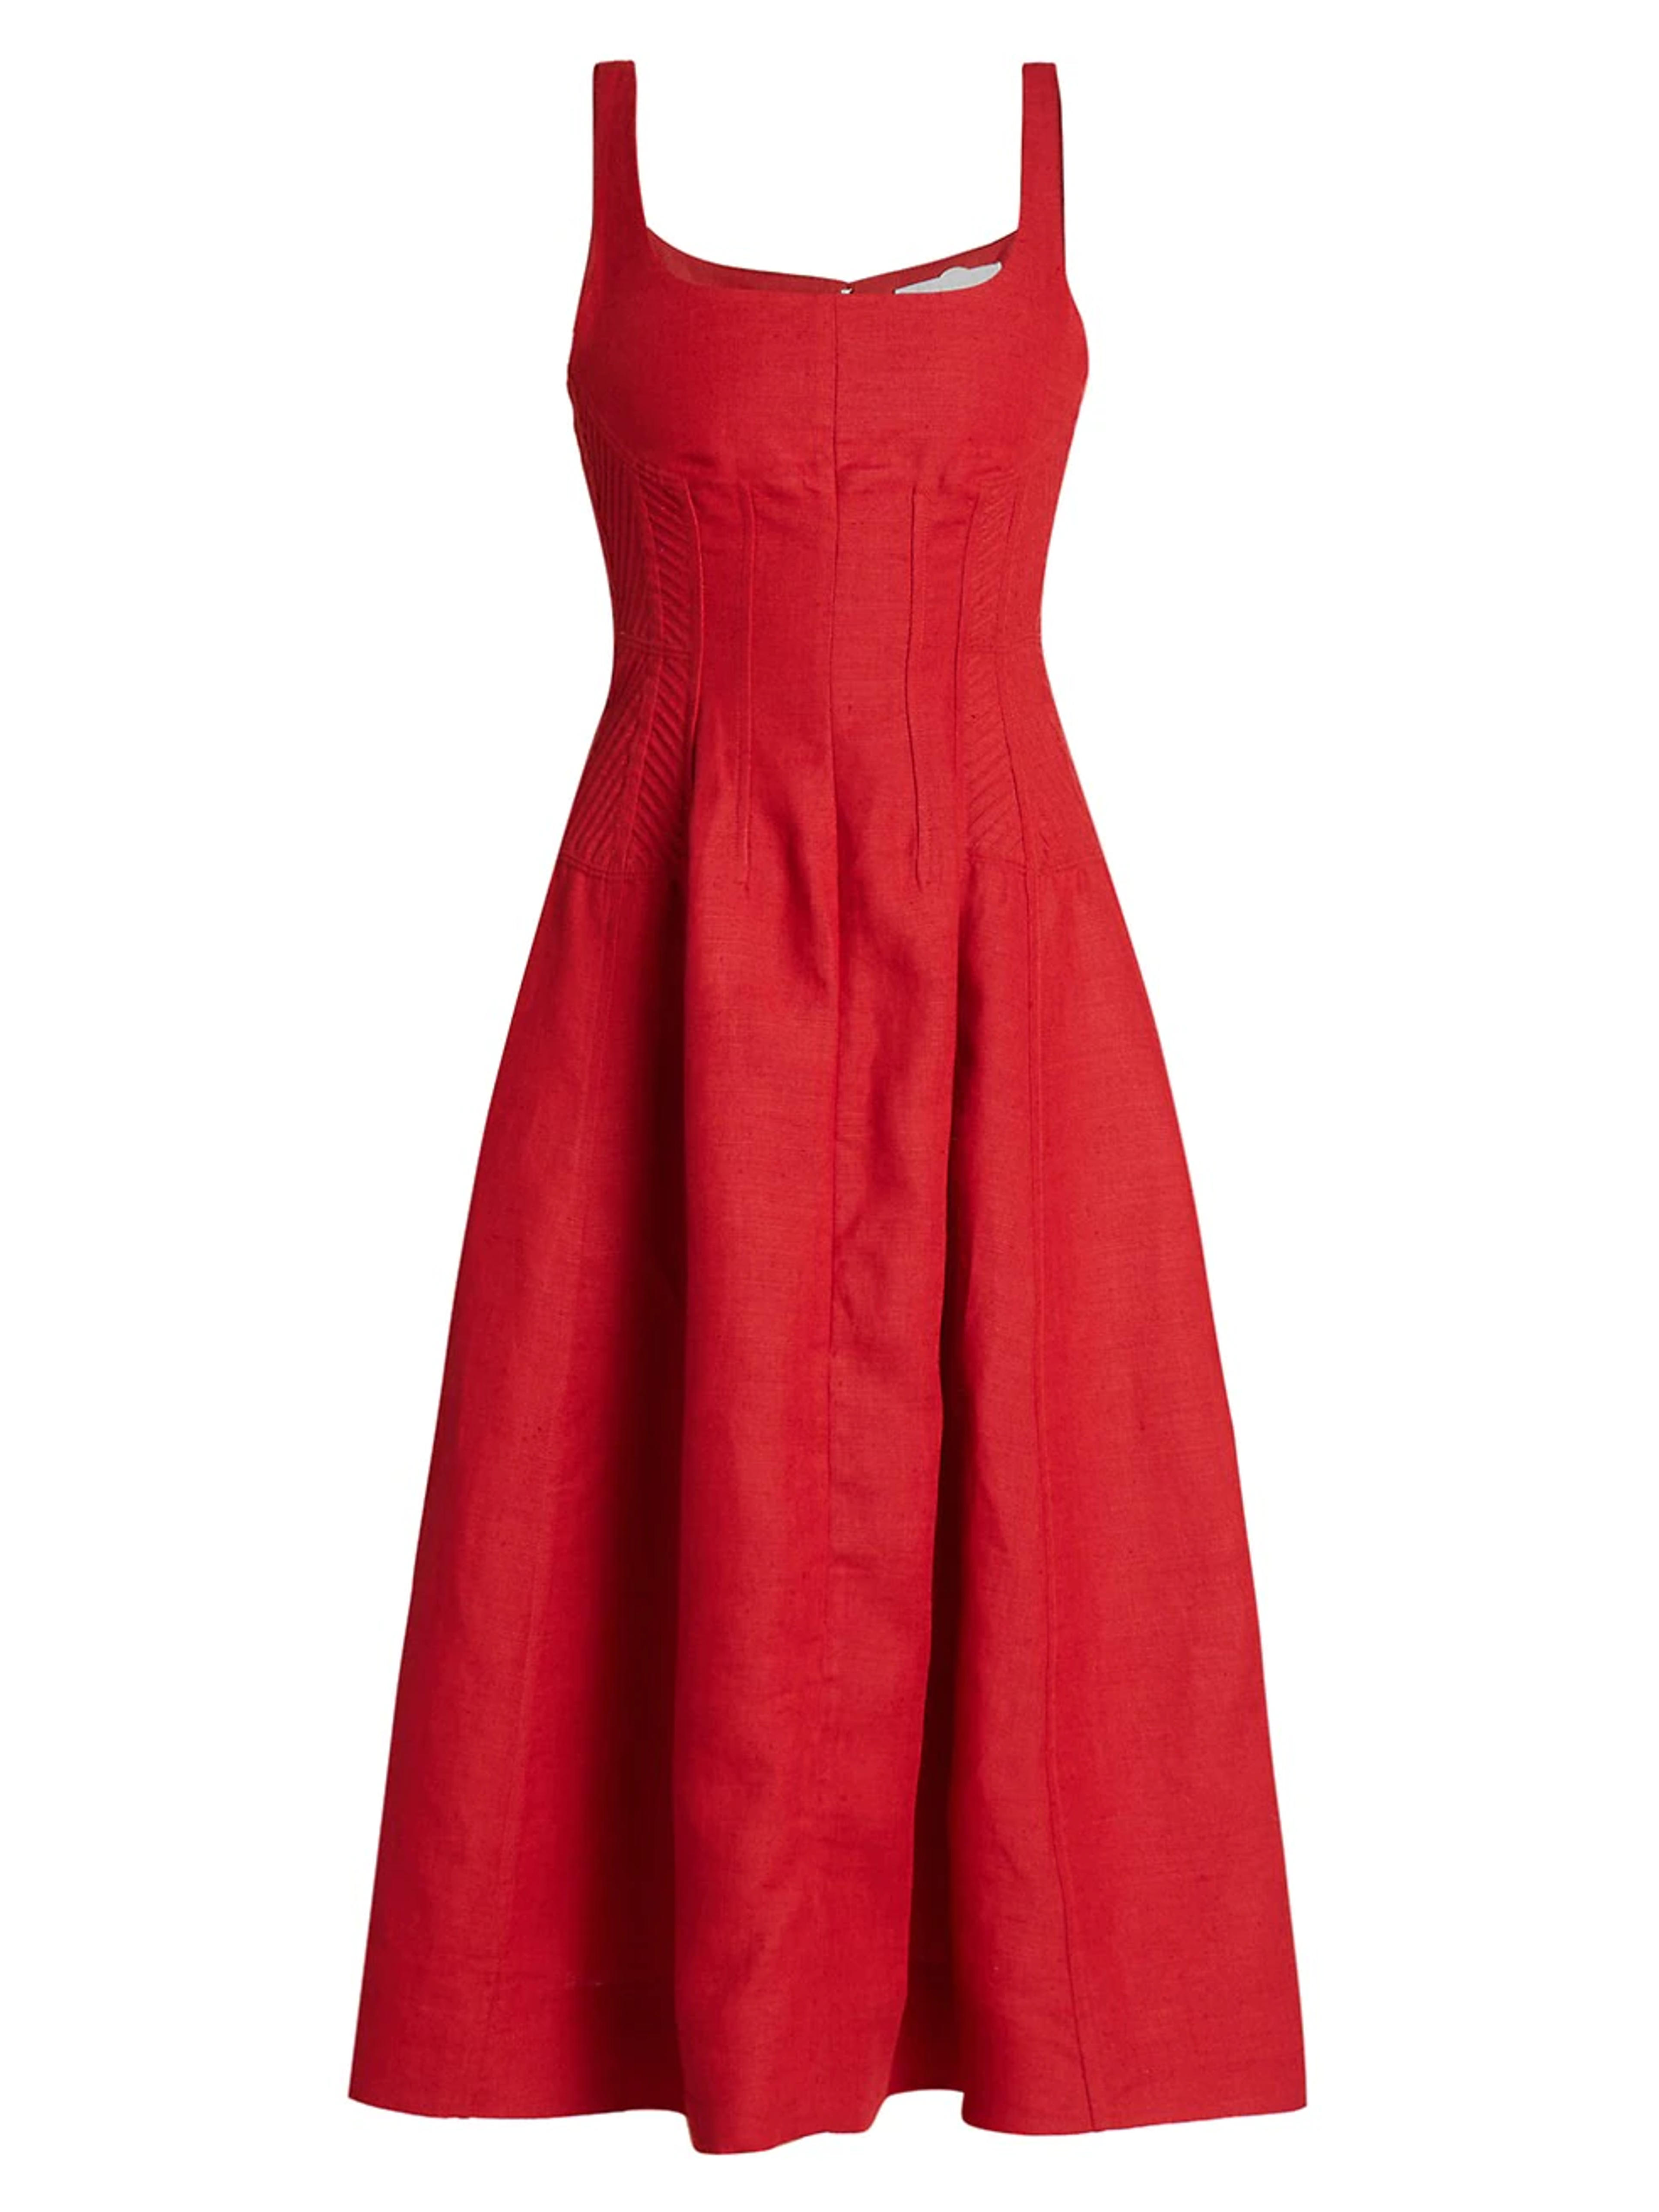 Chloé Textured Corset-Inspired Midi-Dress 